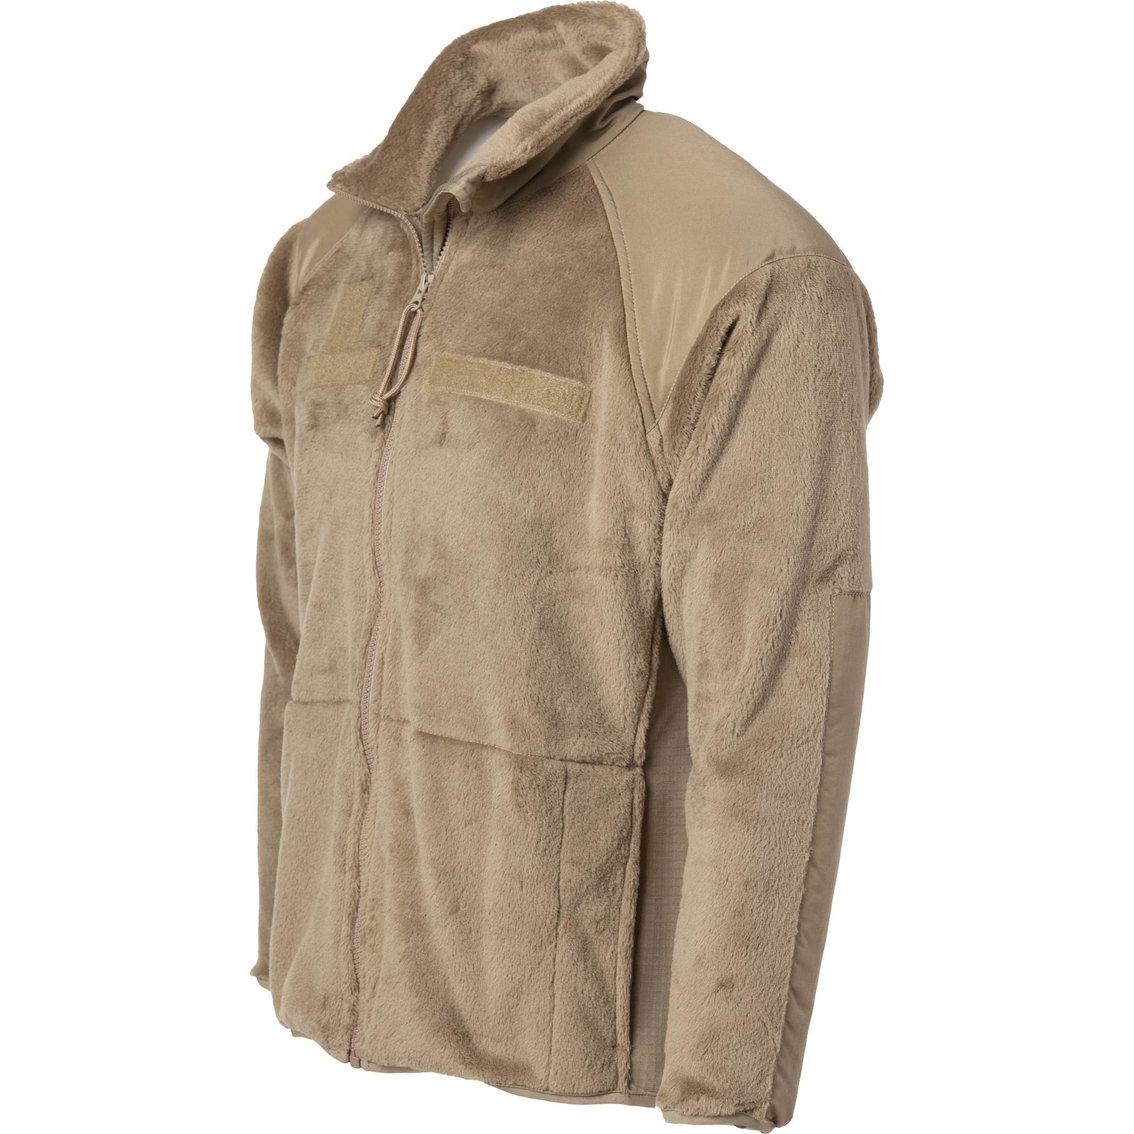 Shop Army Fleece Jacket